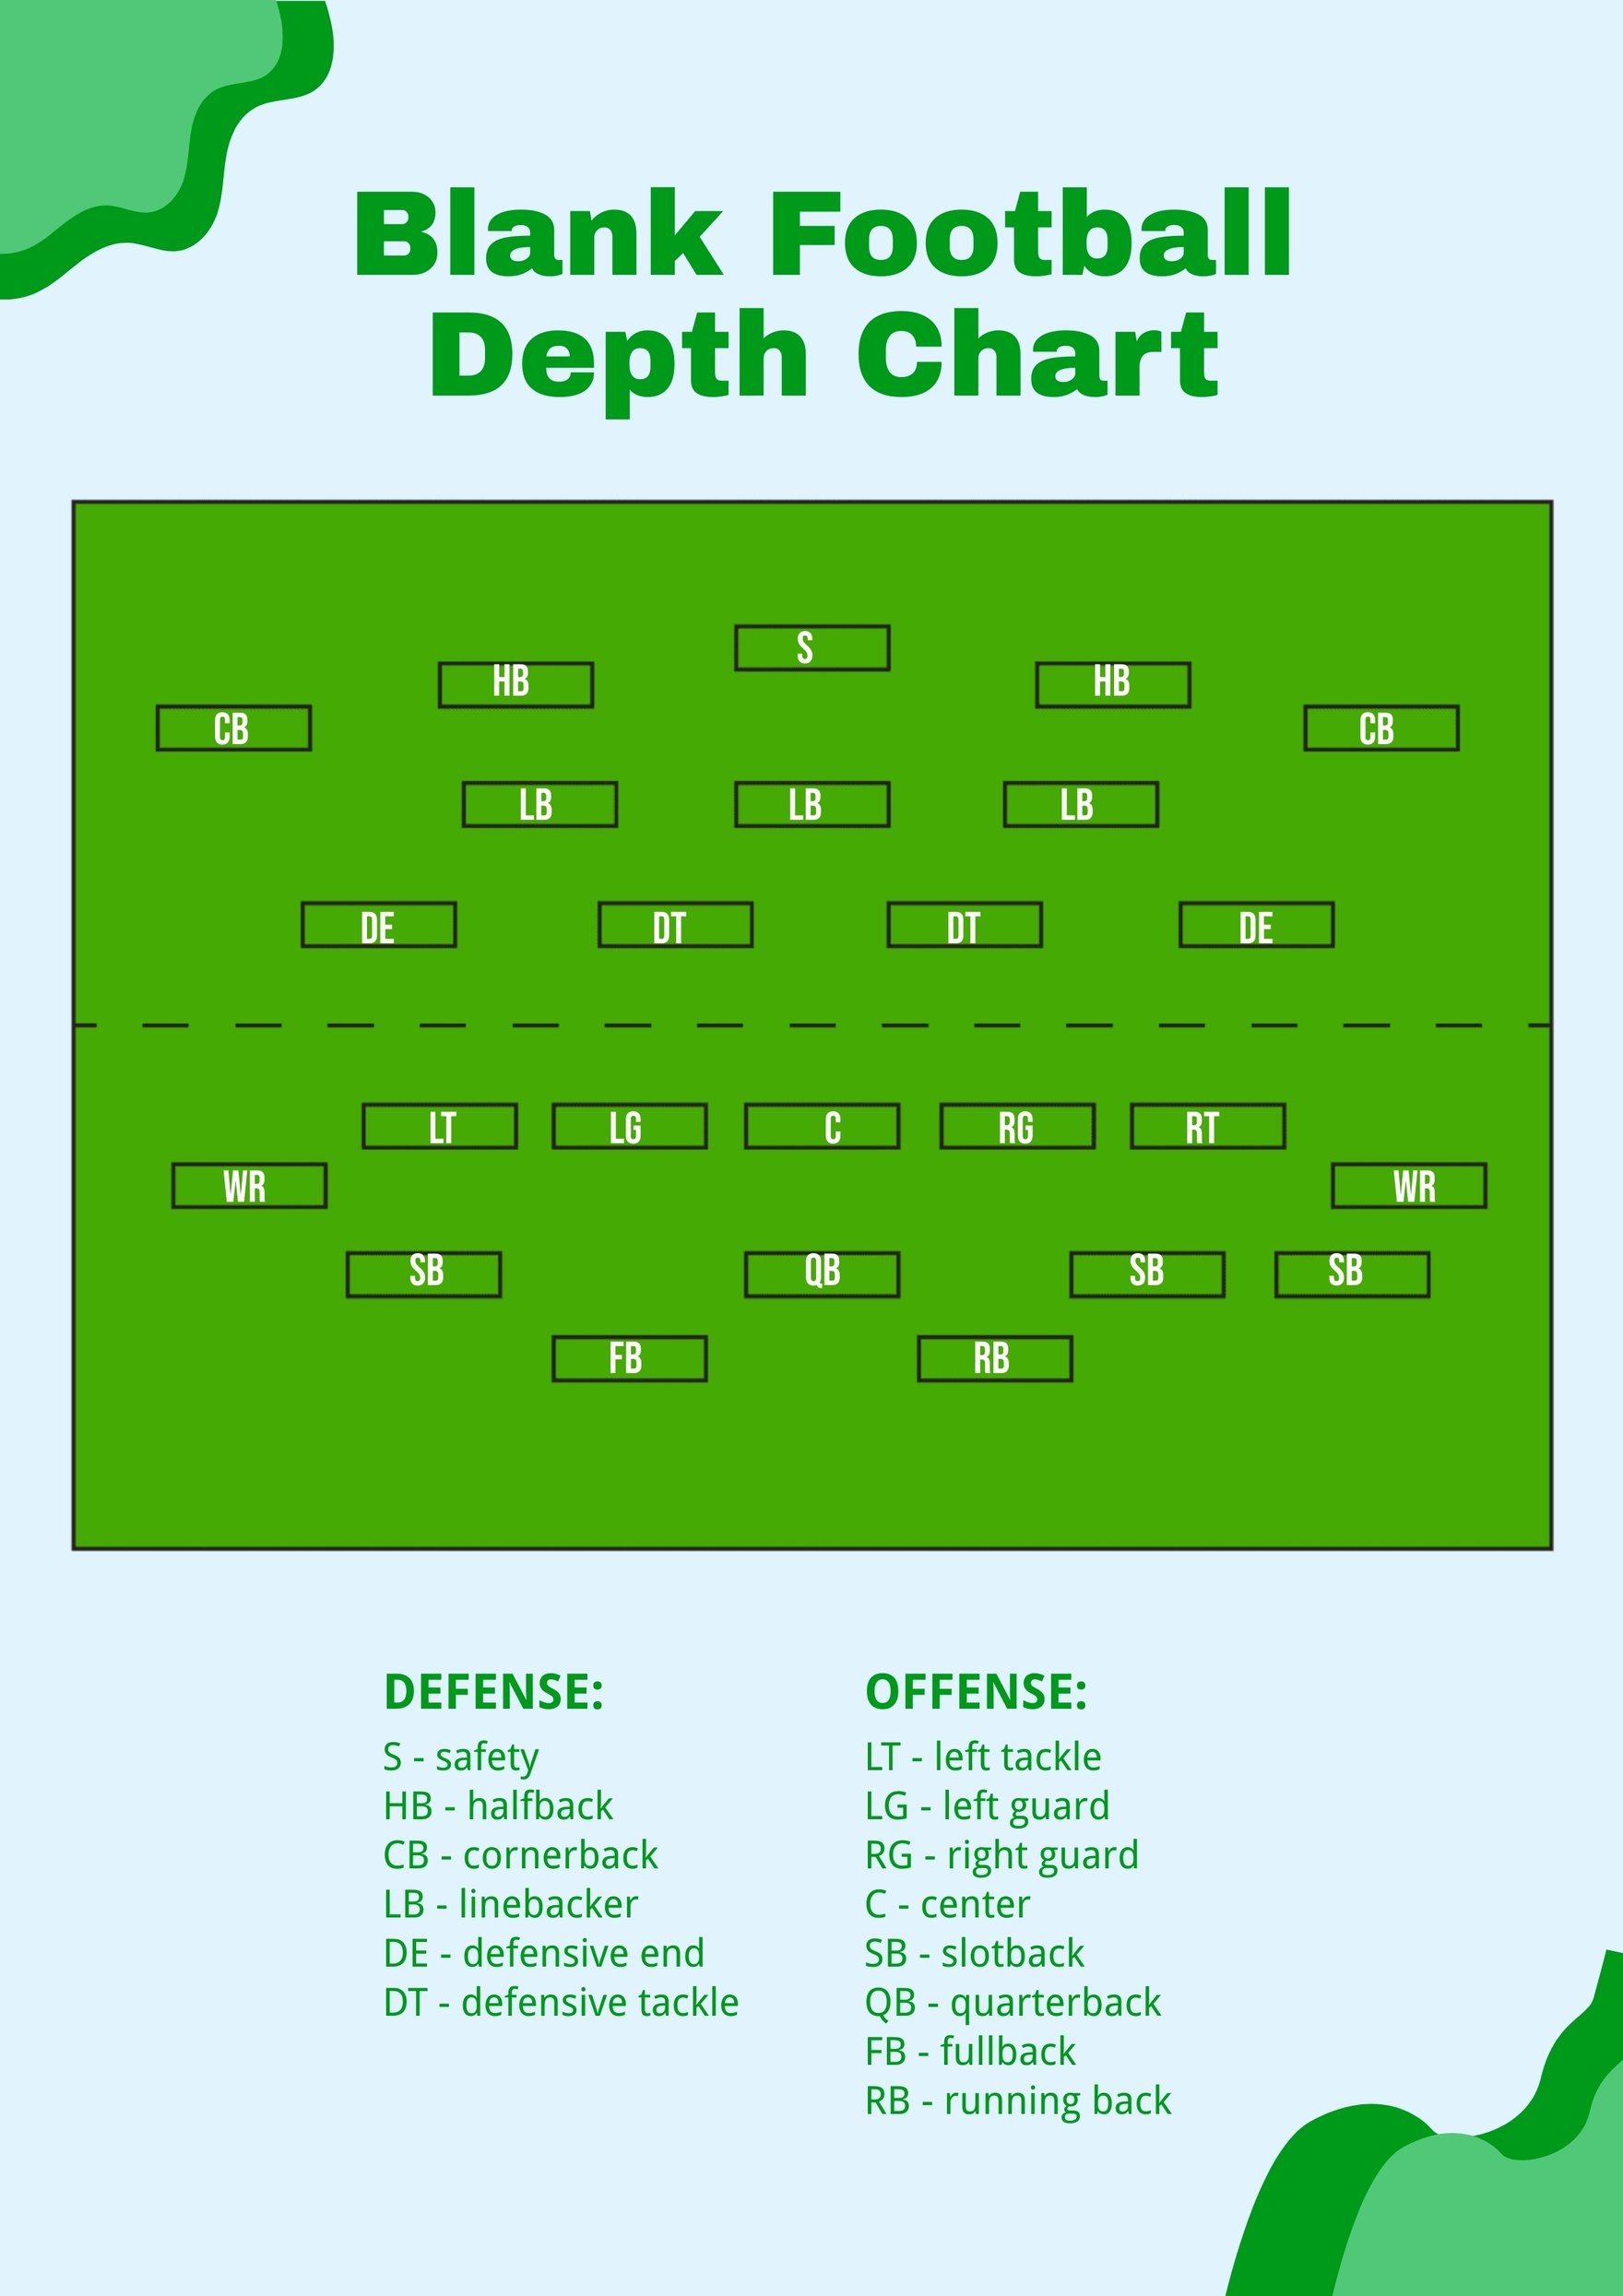 Free Blank Football Depth Chart Download in PDF, Illustrator